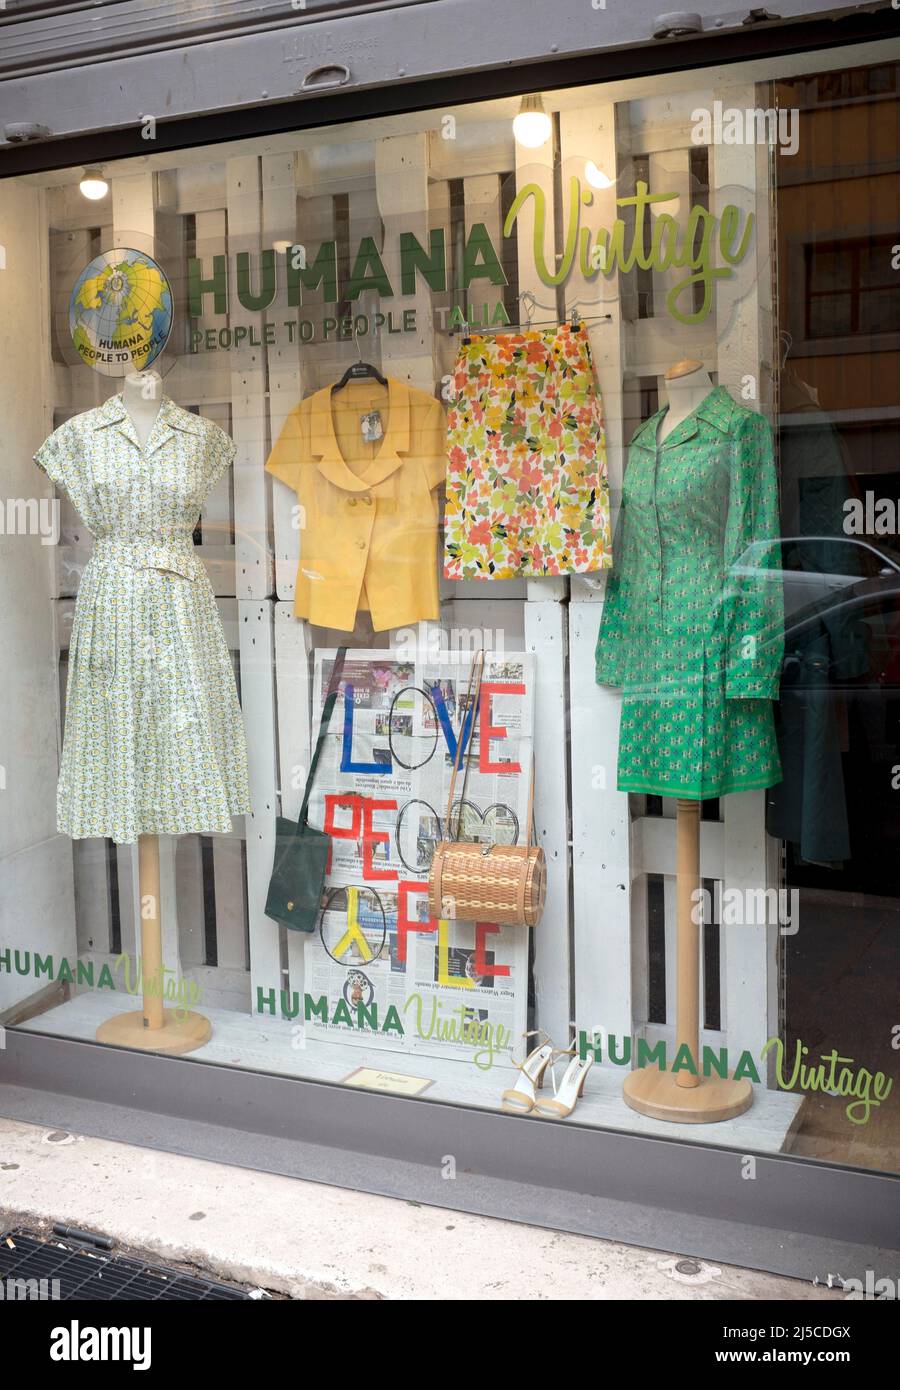 Humana Vintage Clothing Shop Via Cavour Rome Italy Stock Photo - Alamy